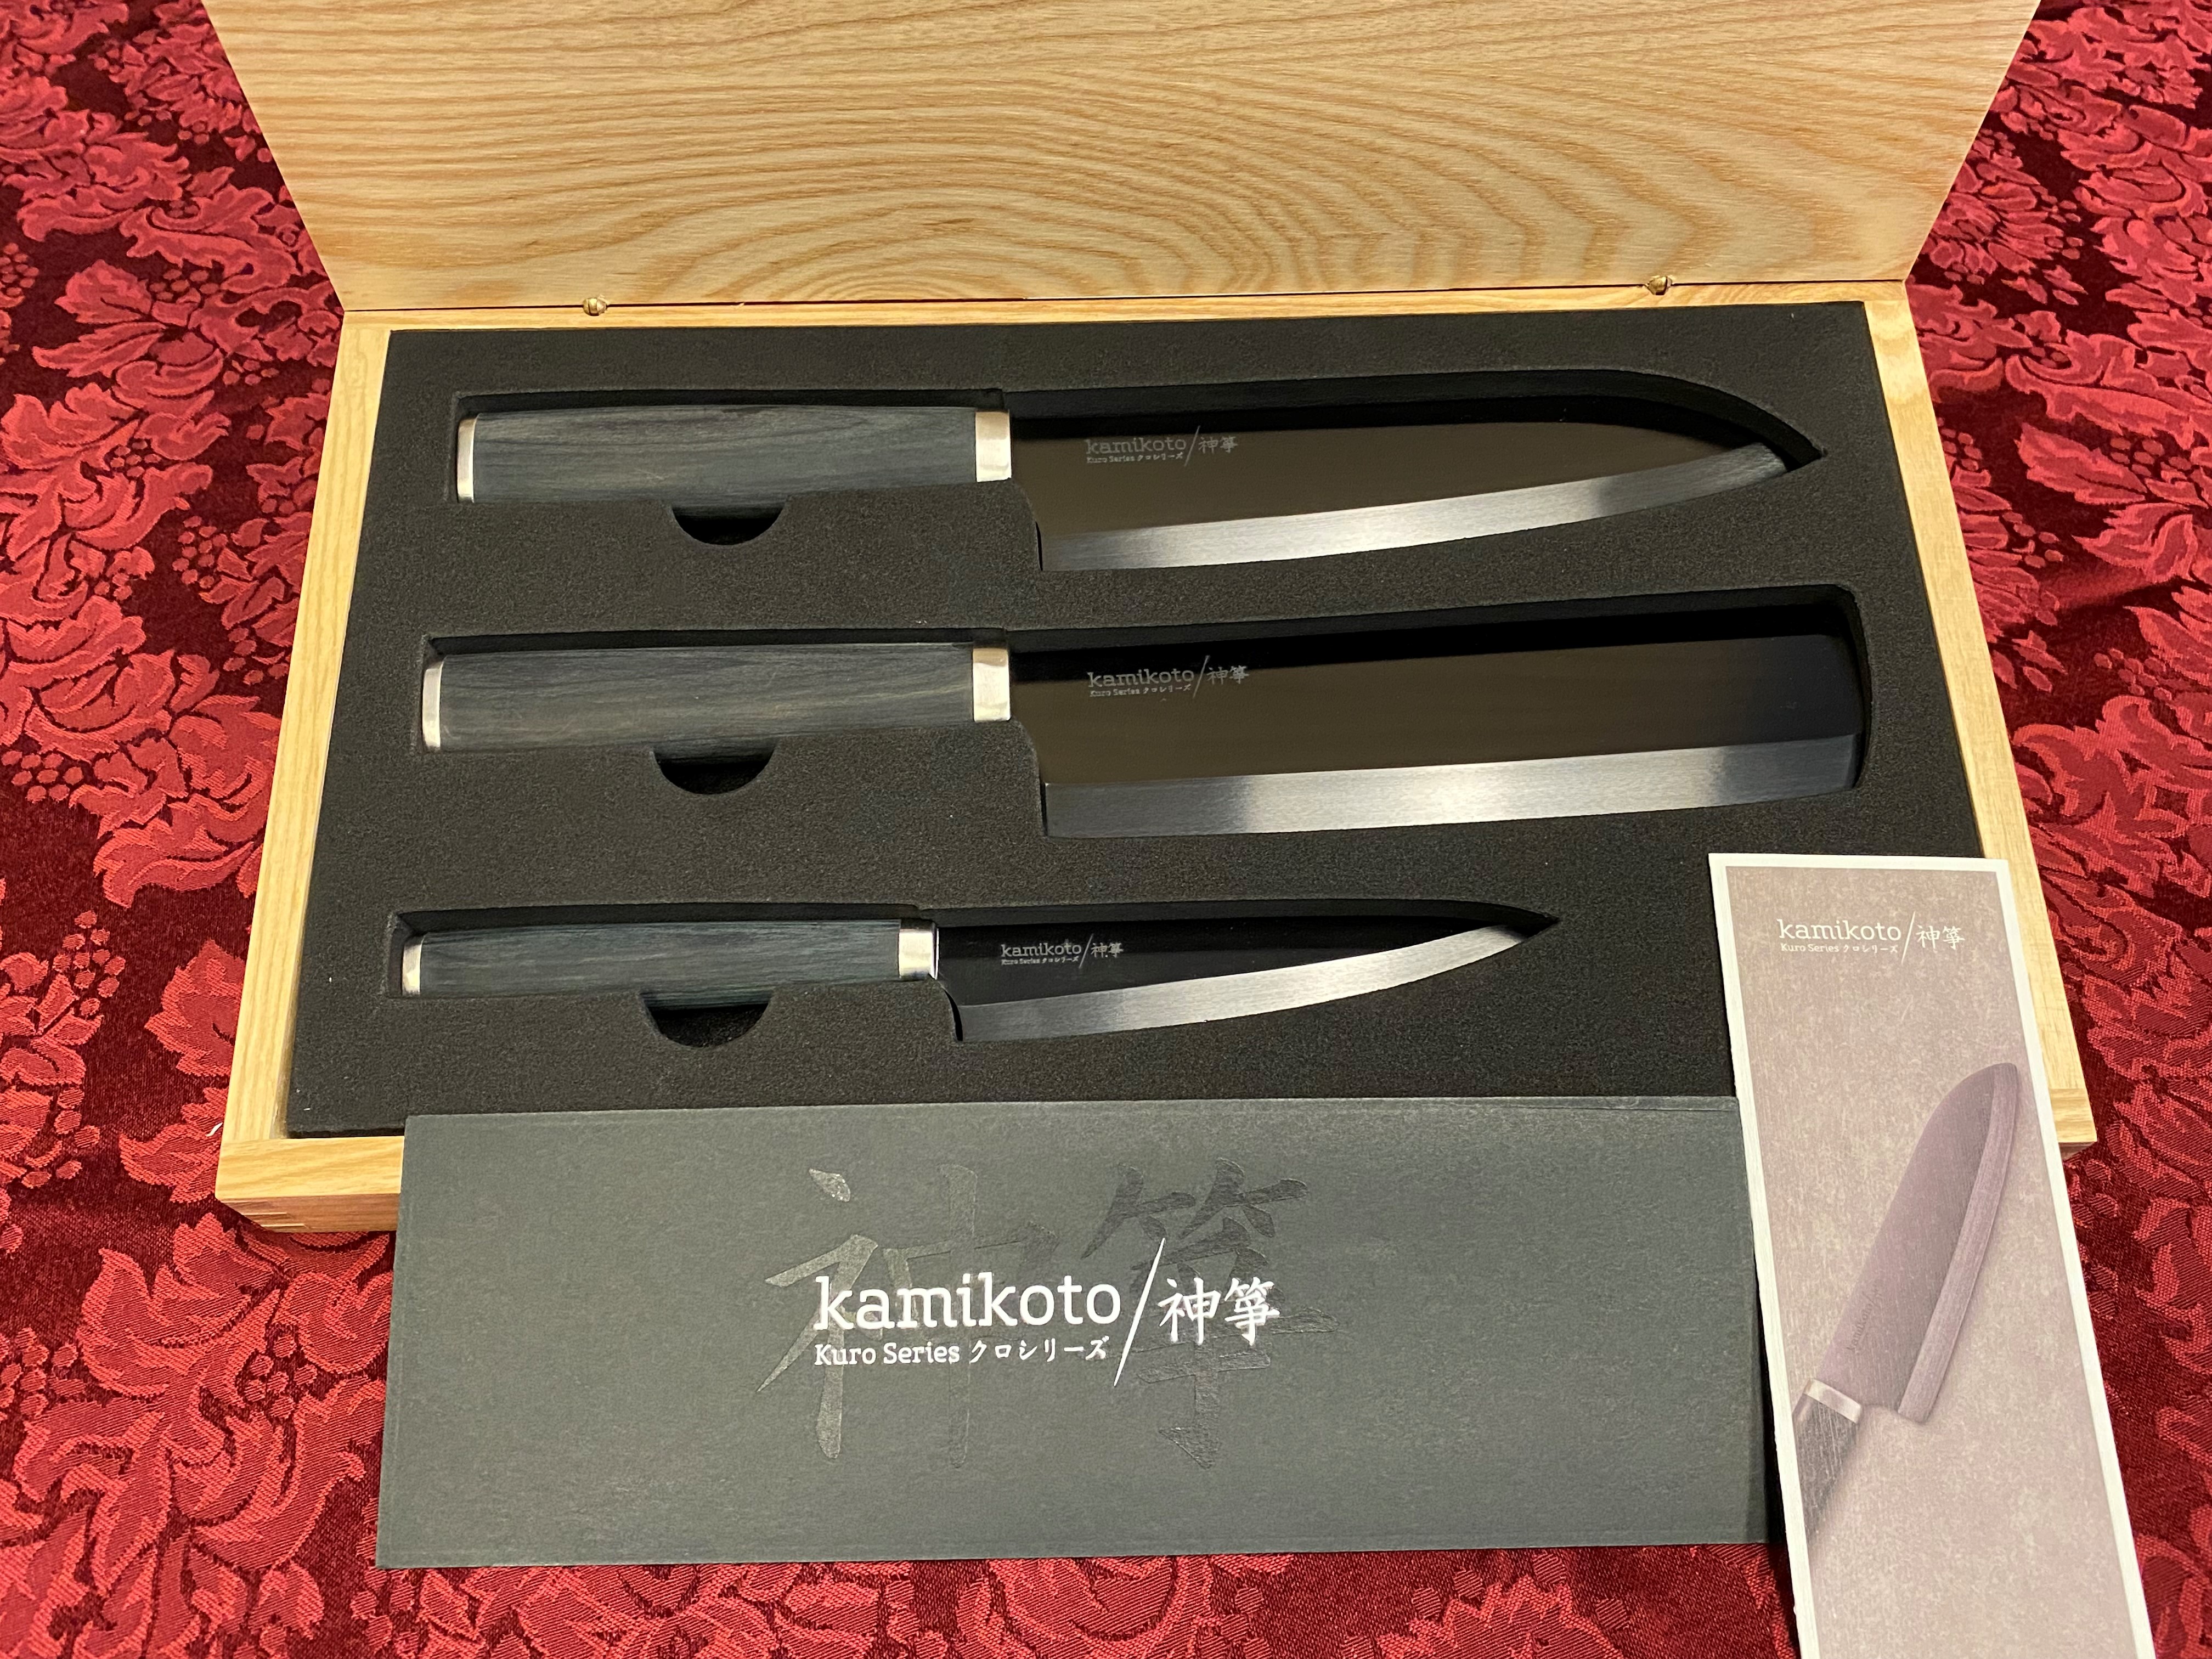 Kamikoto Kuro Series Knife Set, hopeforthefuture